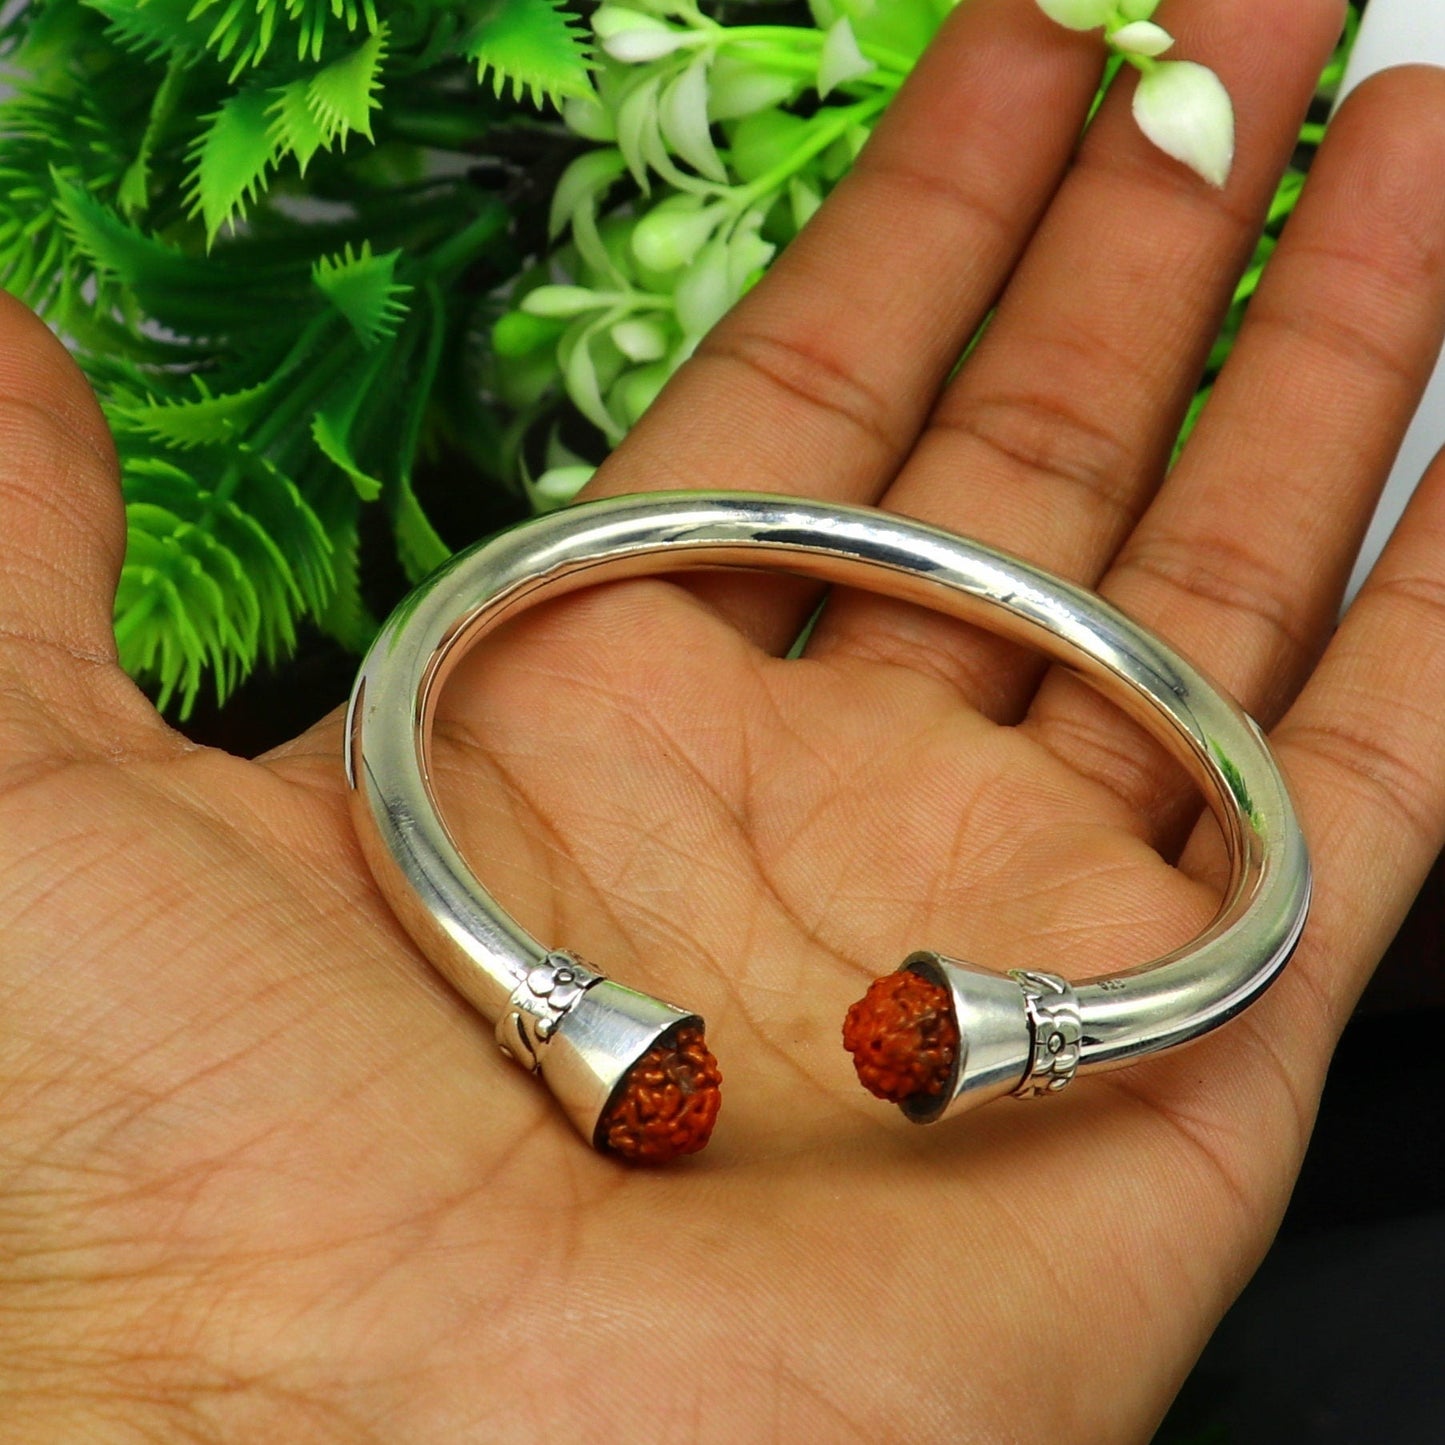 Exclusive 925 sterling silver handmade plain shiny stylish bangle bracelet kada, elegant tribal rudraksha bangle gifting jewelry nsk385 - TRIBAL ORNAMENTS